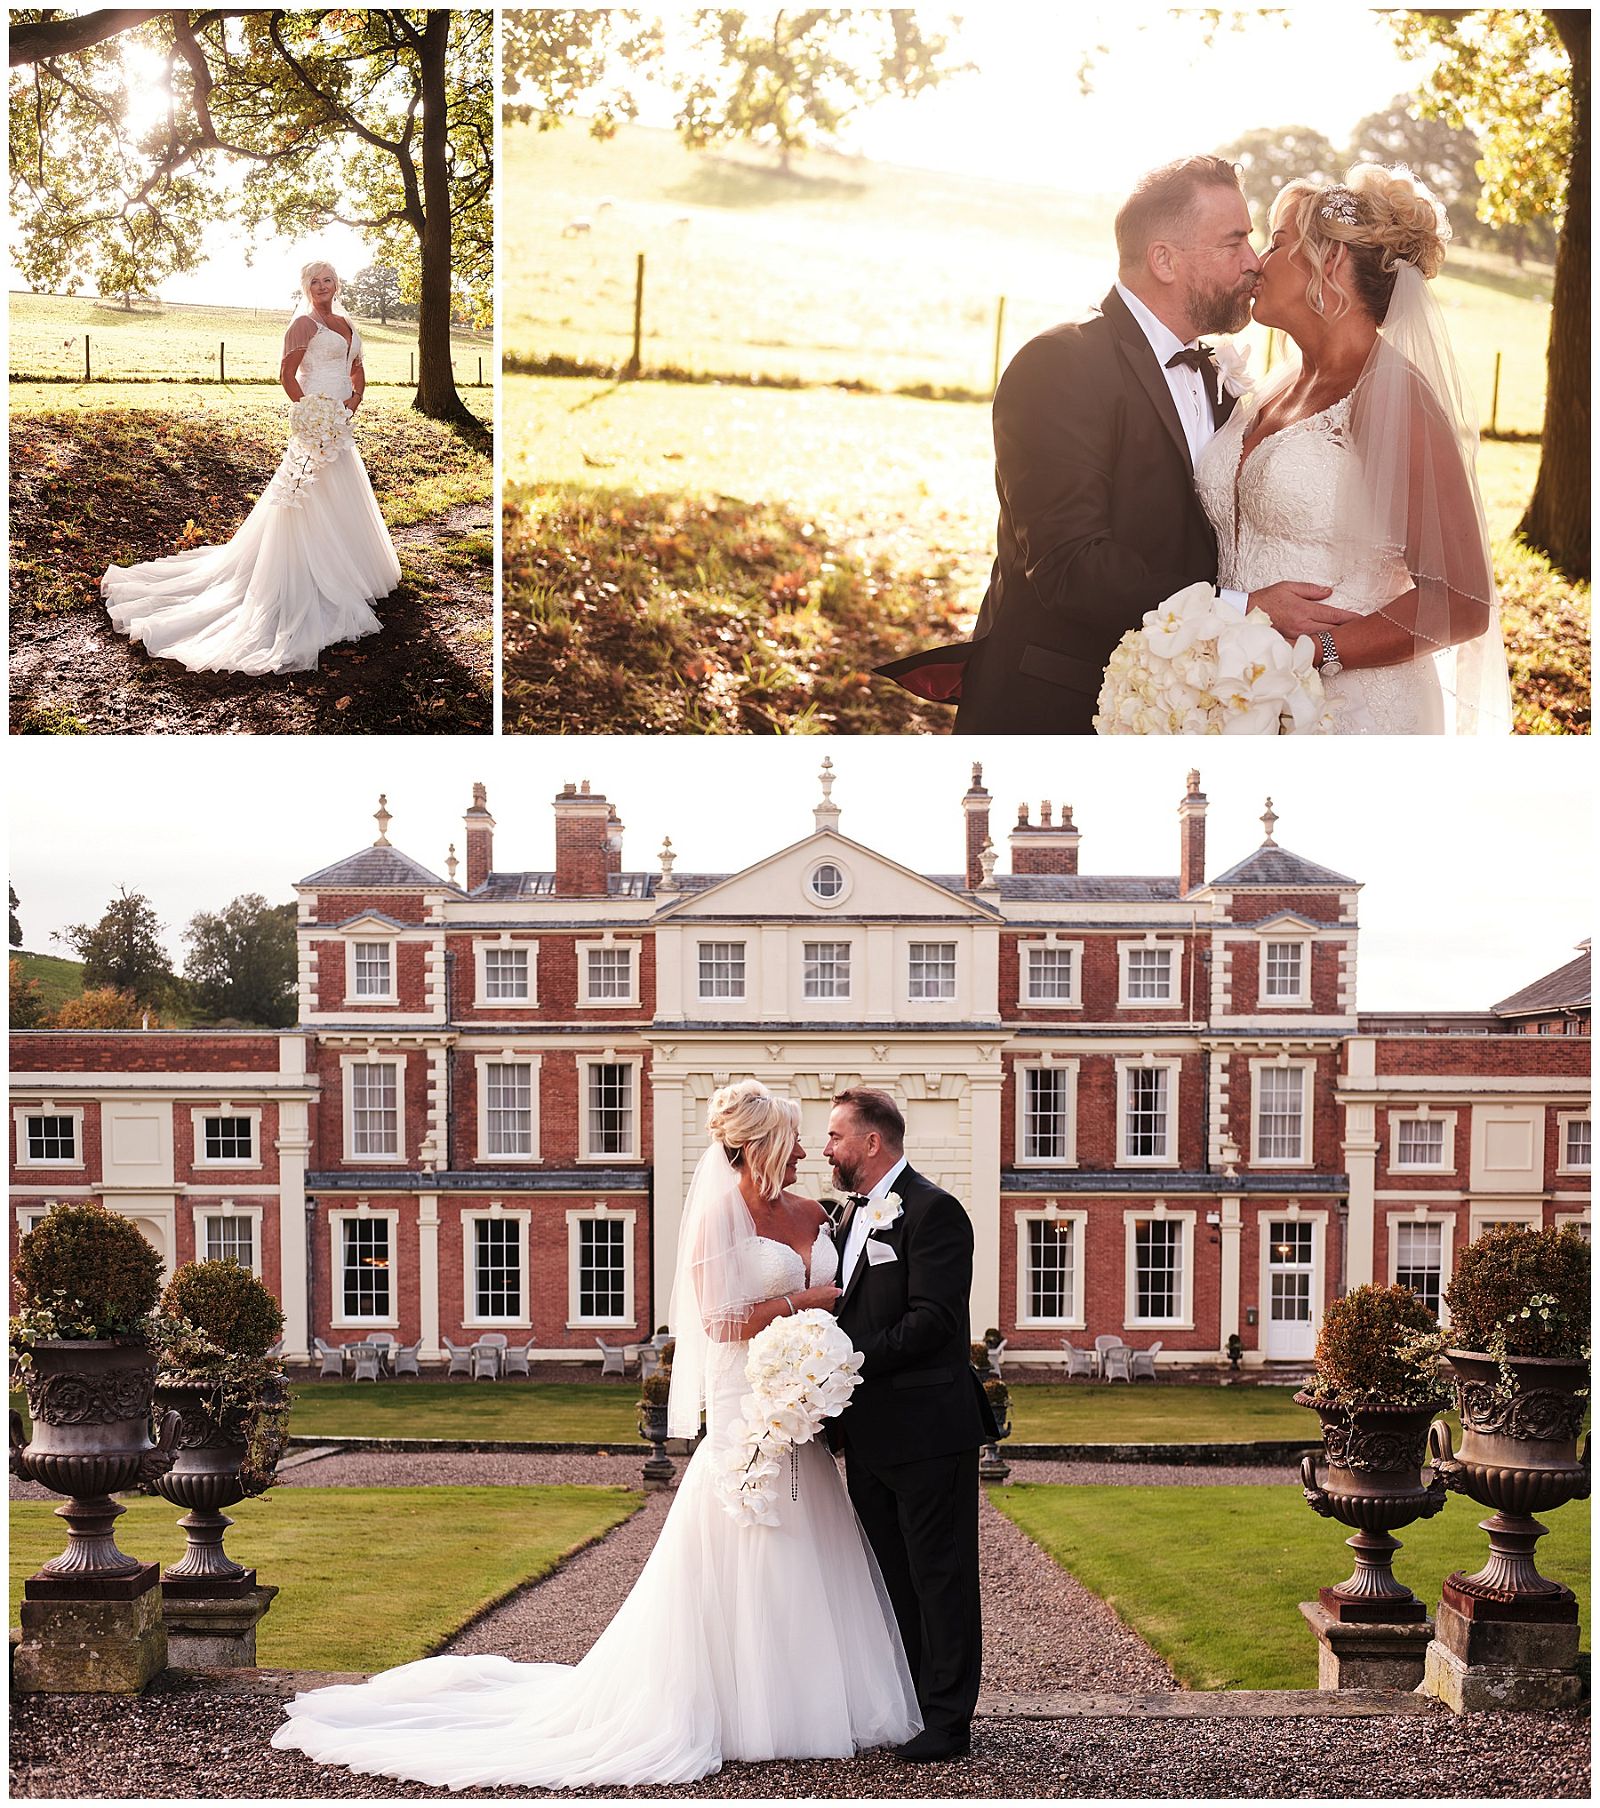 Creative documentary wedding photography at Hawkstone Hall captured by Shropshire Wedding Photographer Stuart James